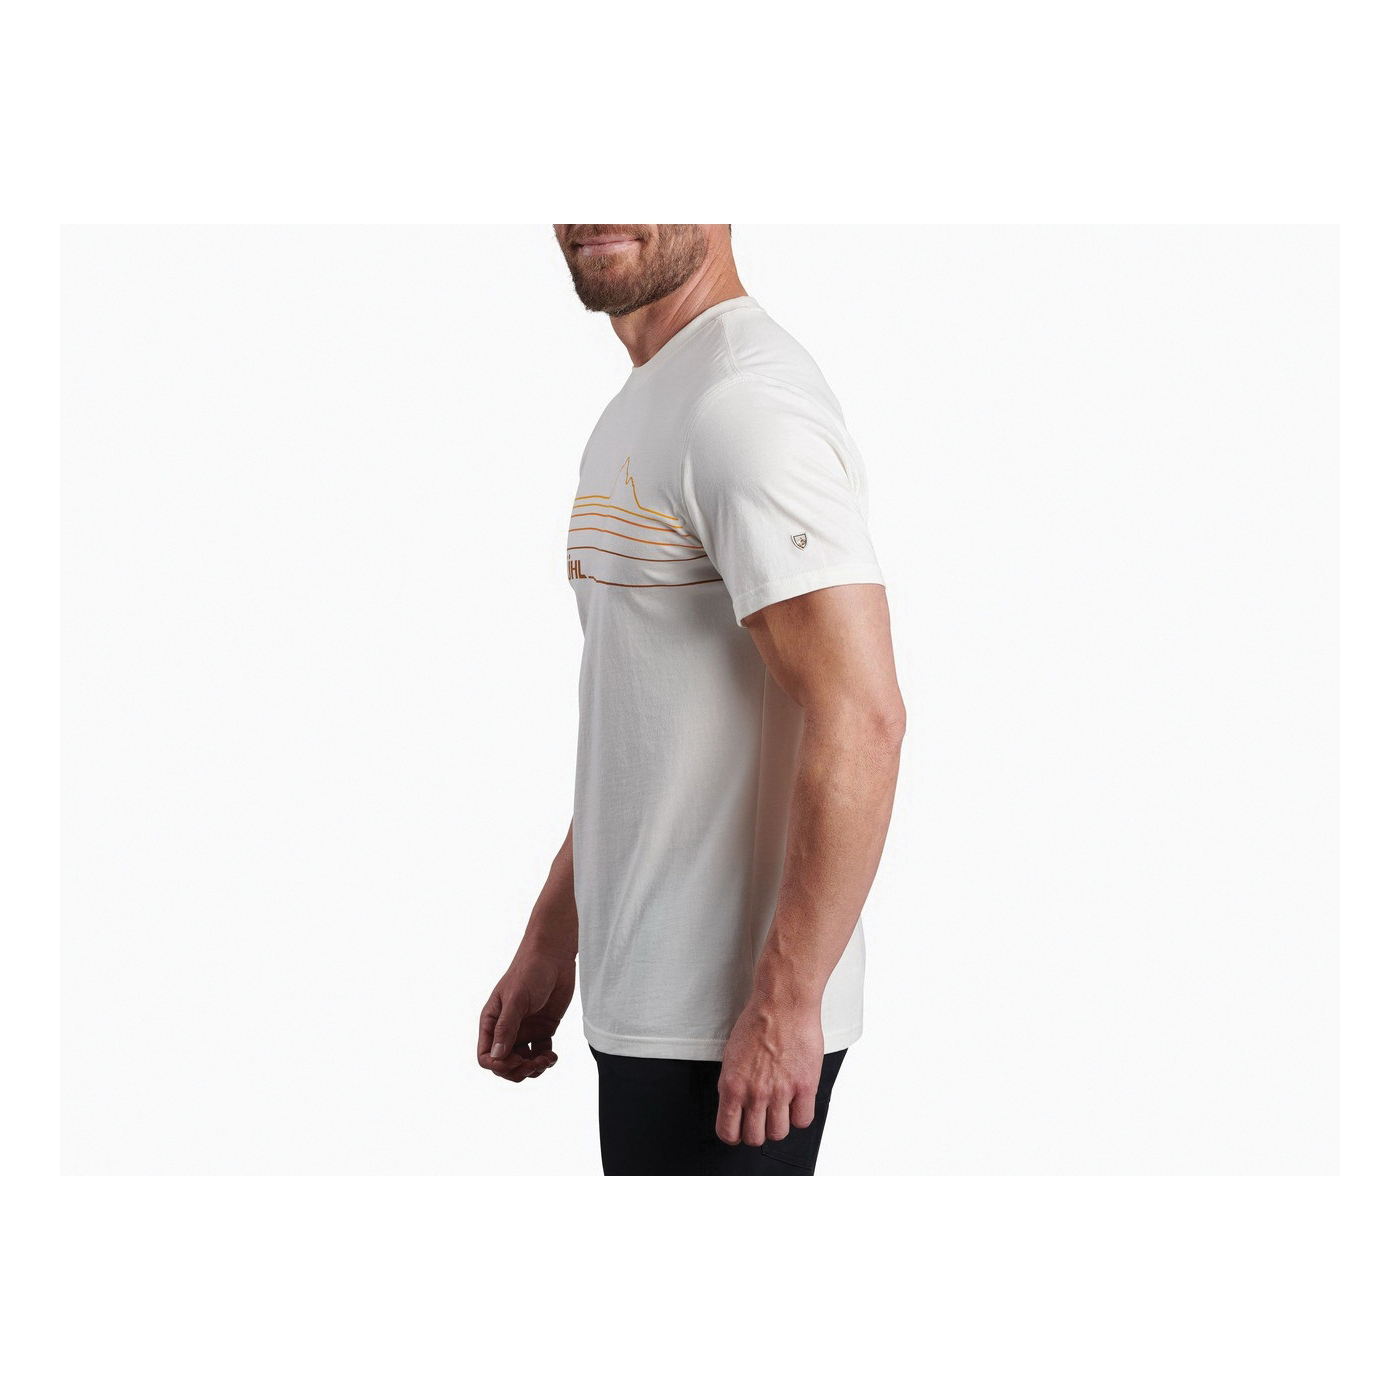 KUHL MOUNTAIN LINES Series 7397-WH-M T-Shirt, M, Cotton, White, KUHL Graphic Print/Pattern, Short Sleeve, Klassik Fit - 3